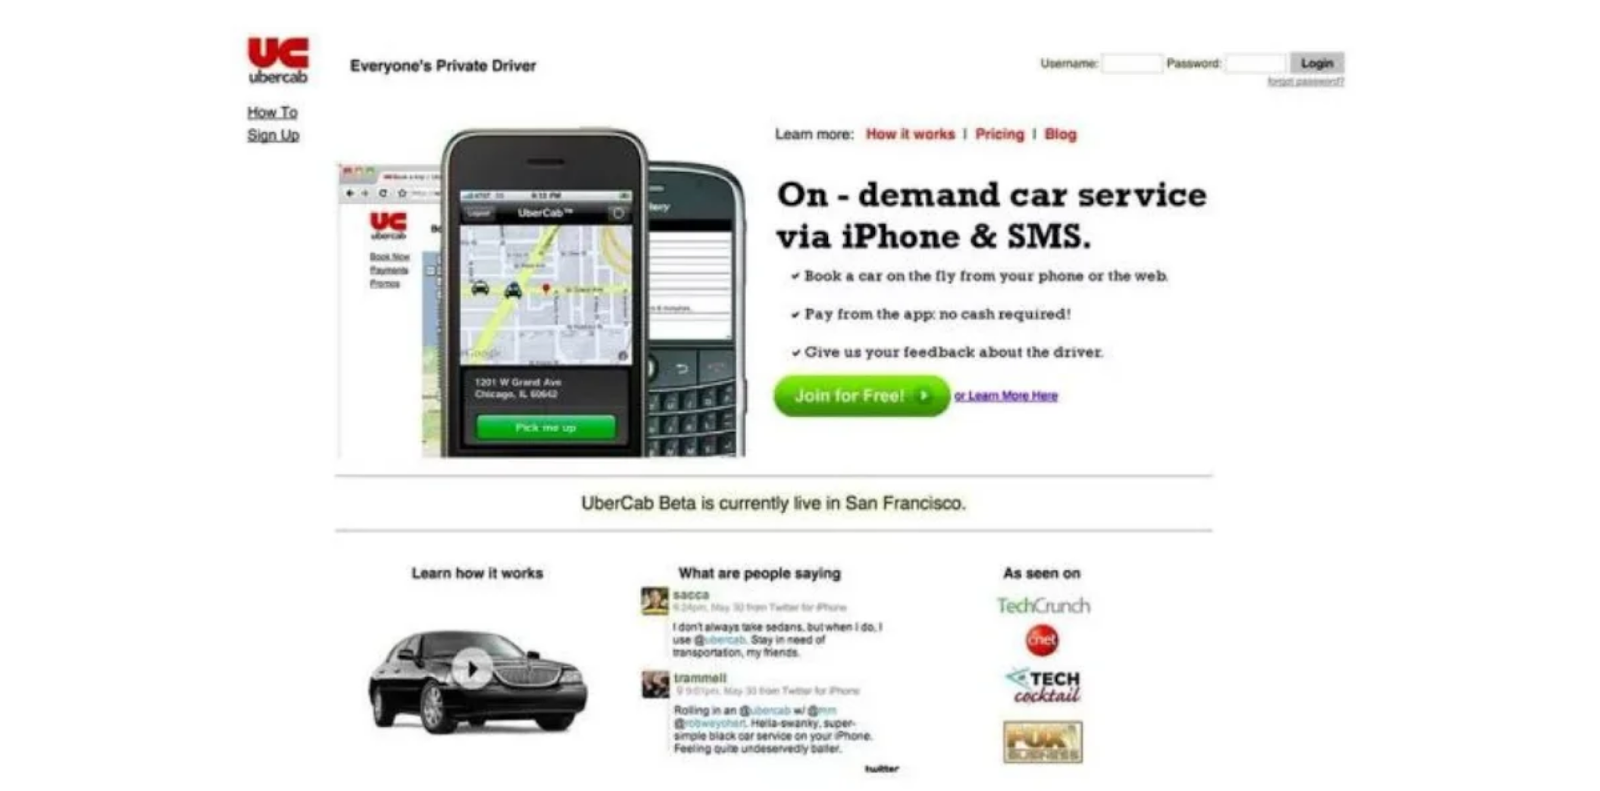 Online advertising of Uber MVP, UberCab iPhone application.